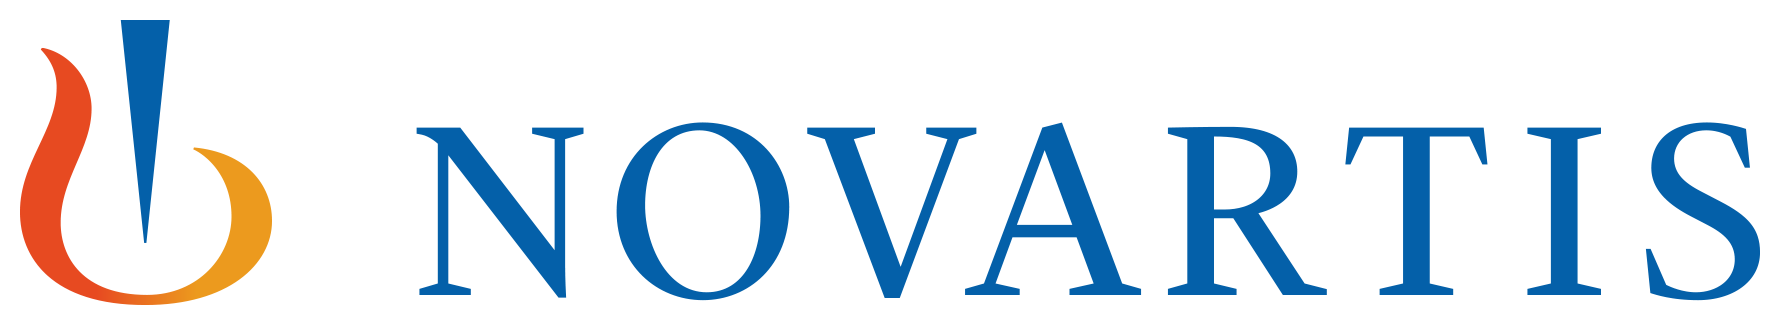 Novartis logo no tagline